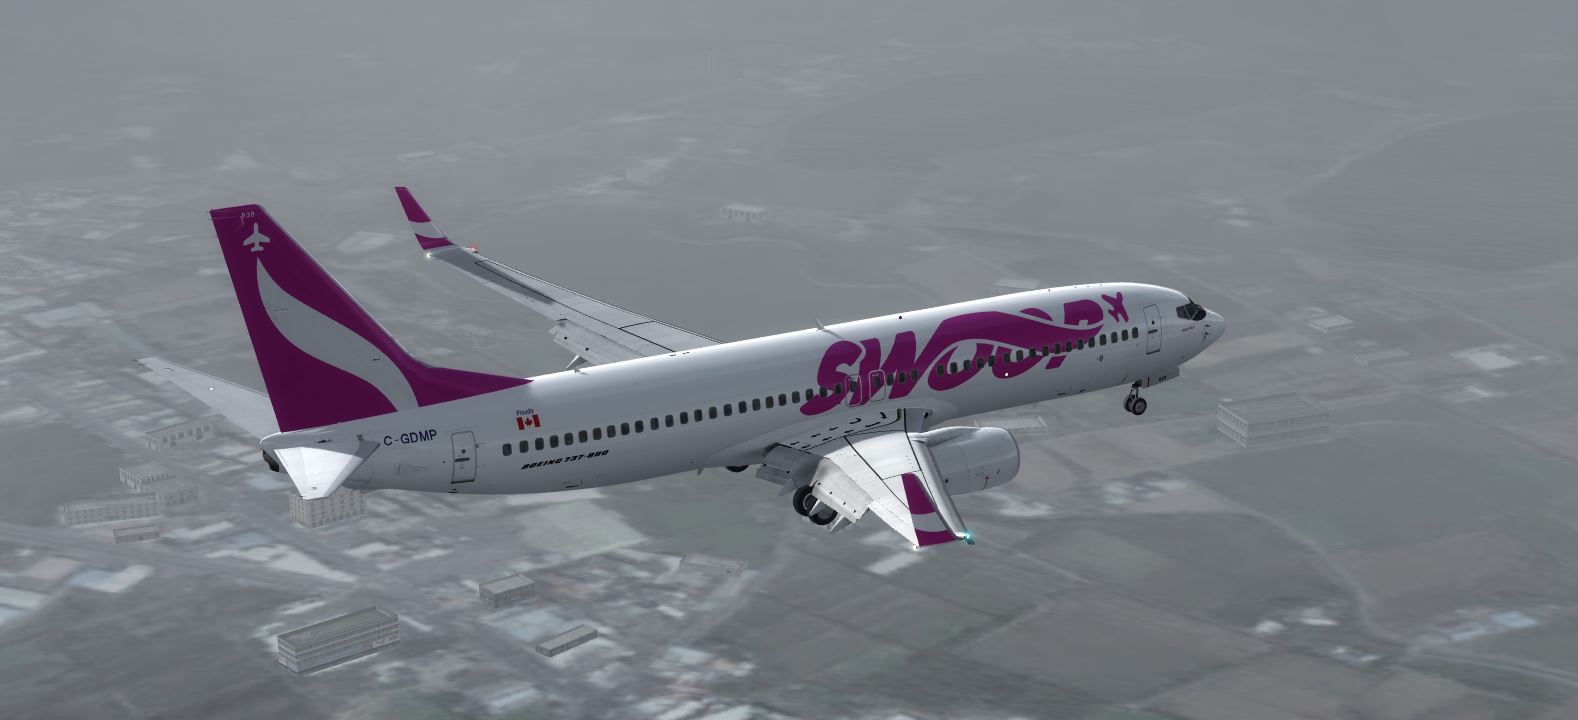 B737-800 Swoop Airlines-2474 